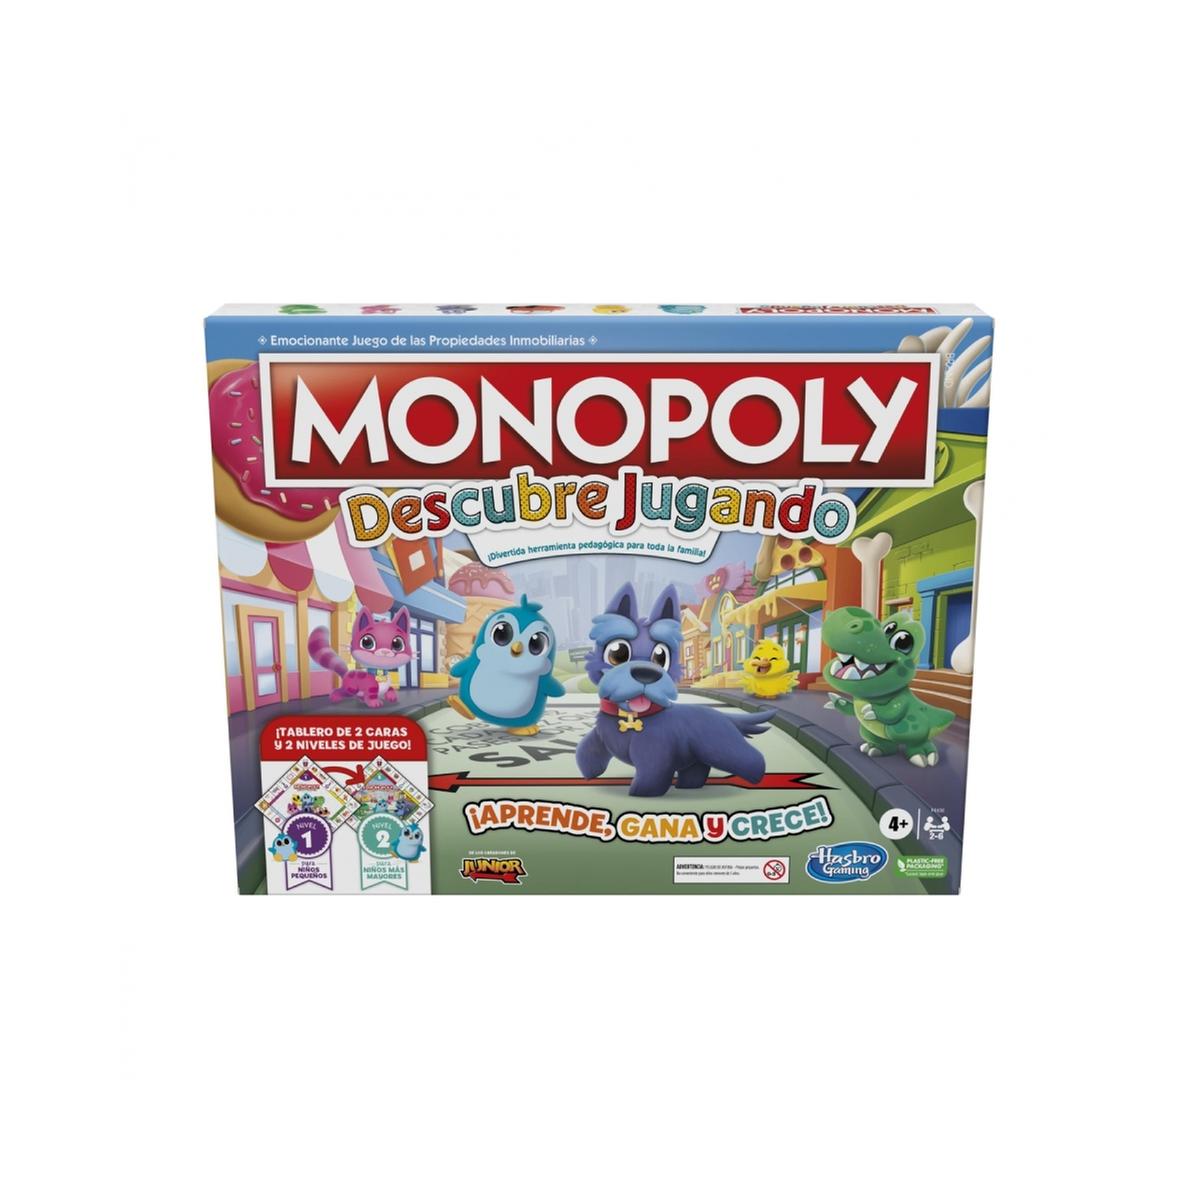 Monopoly - Descubre jugando | Monopoly | Toys"R"Us España